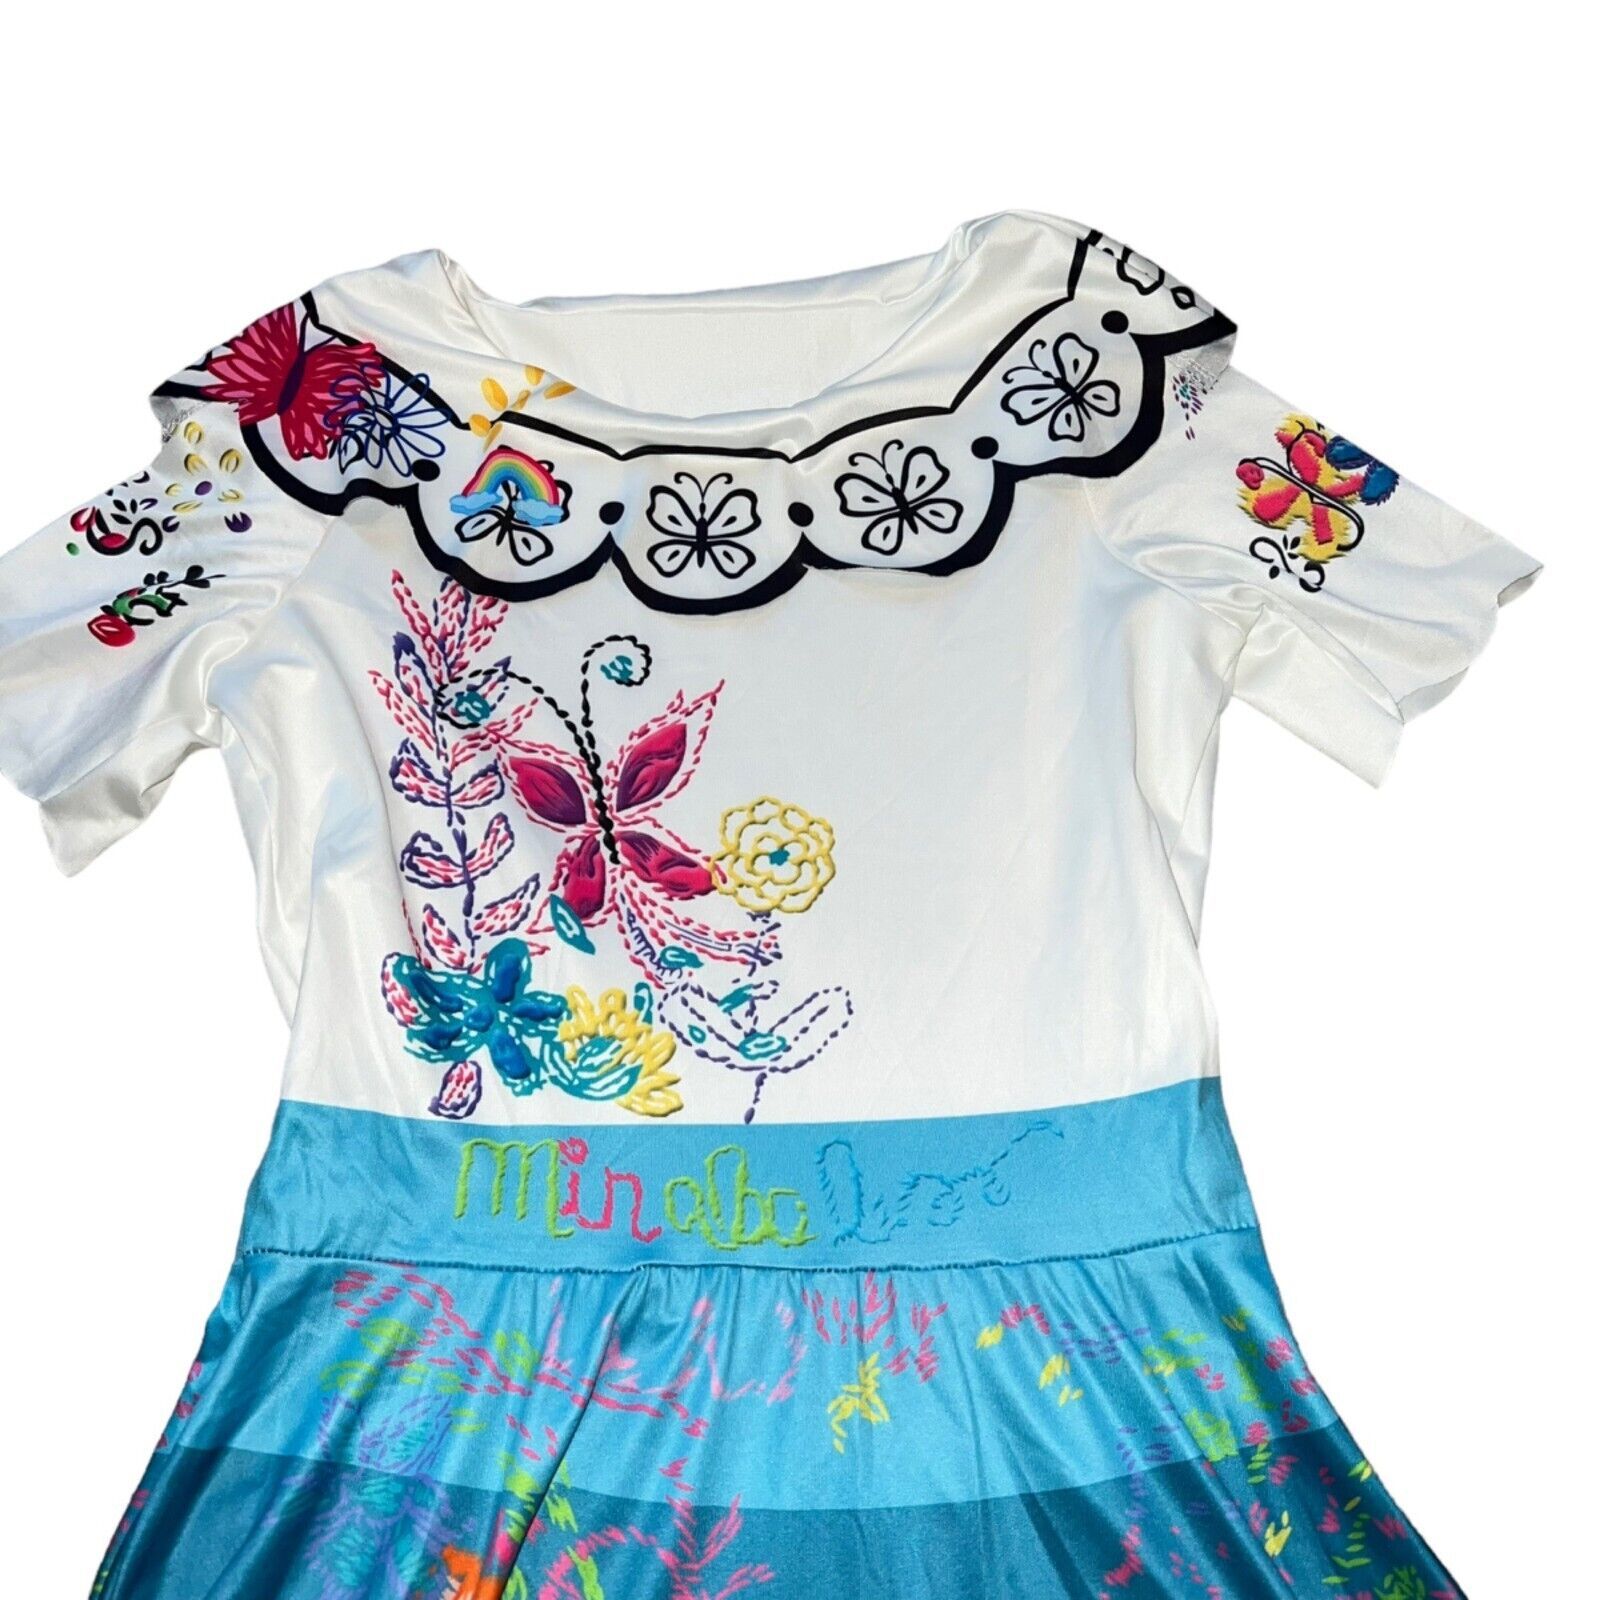 Disney Encanto Isabela Dress Up Set - Fits Sizes 4-6x - New